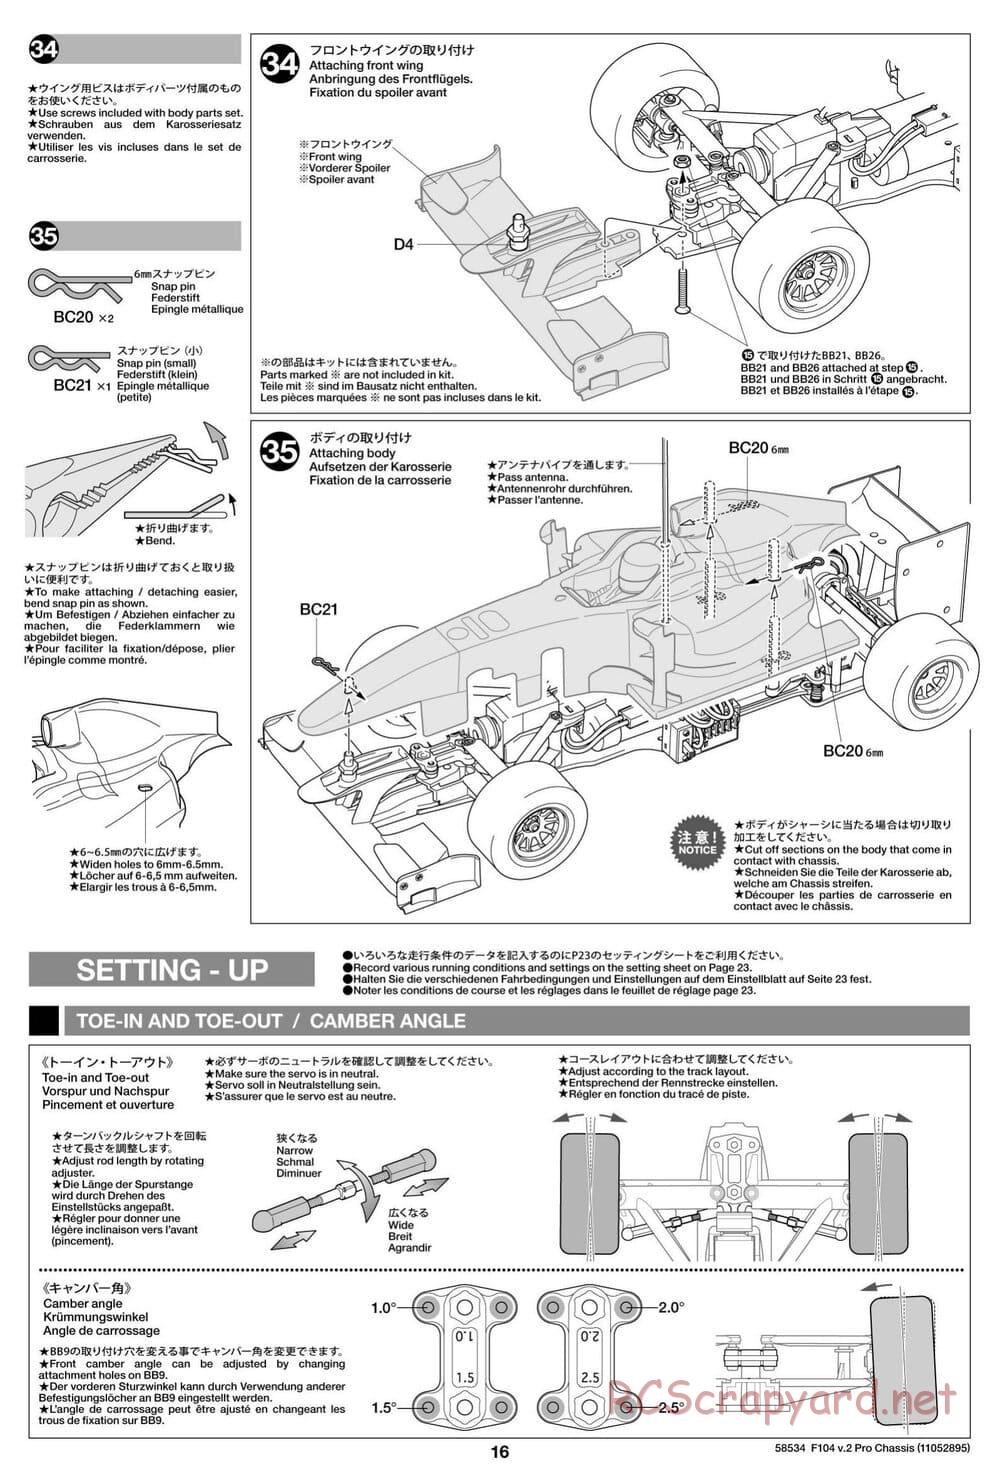 Tamiya - F104 Ver.II PRO Chassis - Manual - Page 16